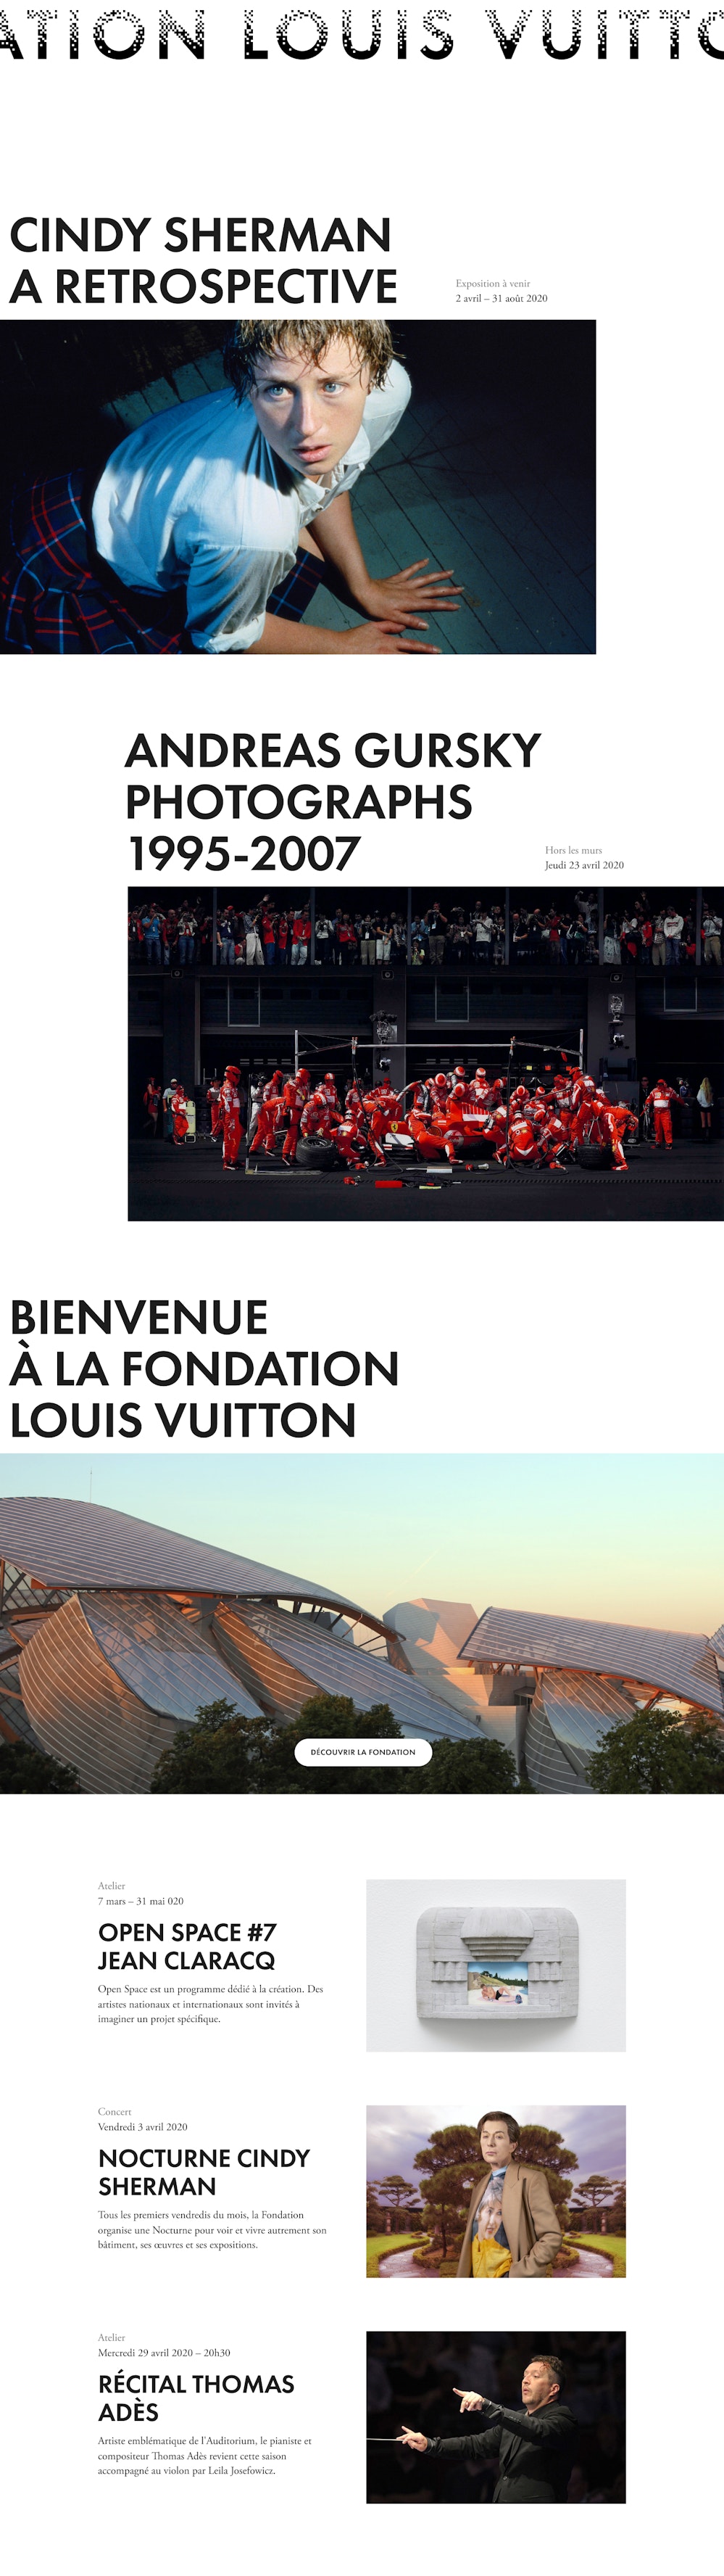 Fondation Louis Vuitton Landmark Guide